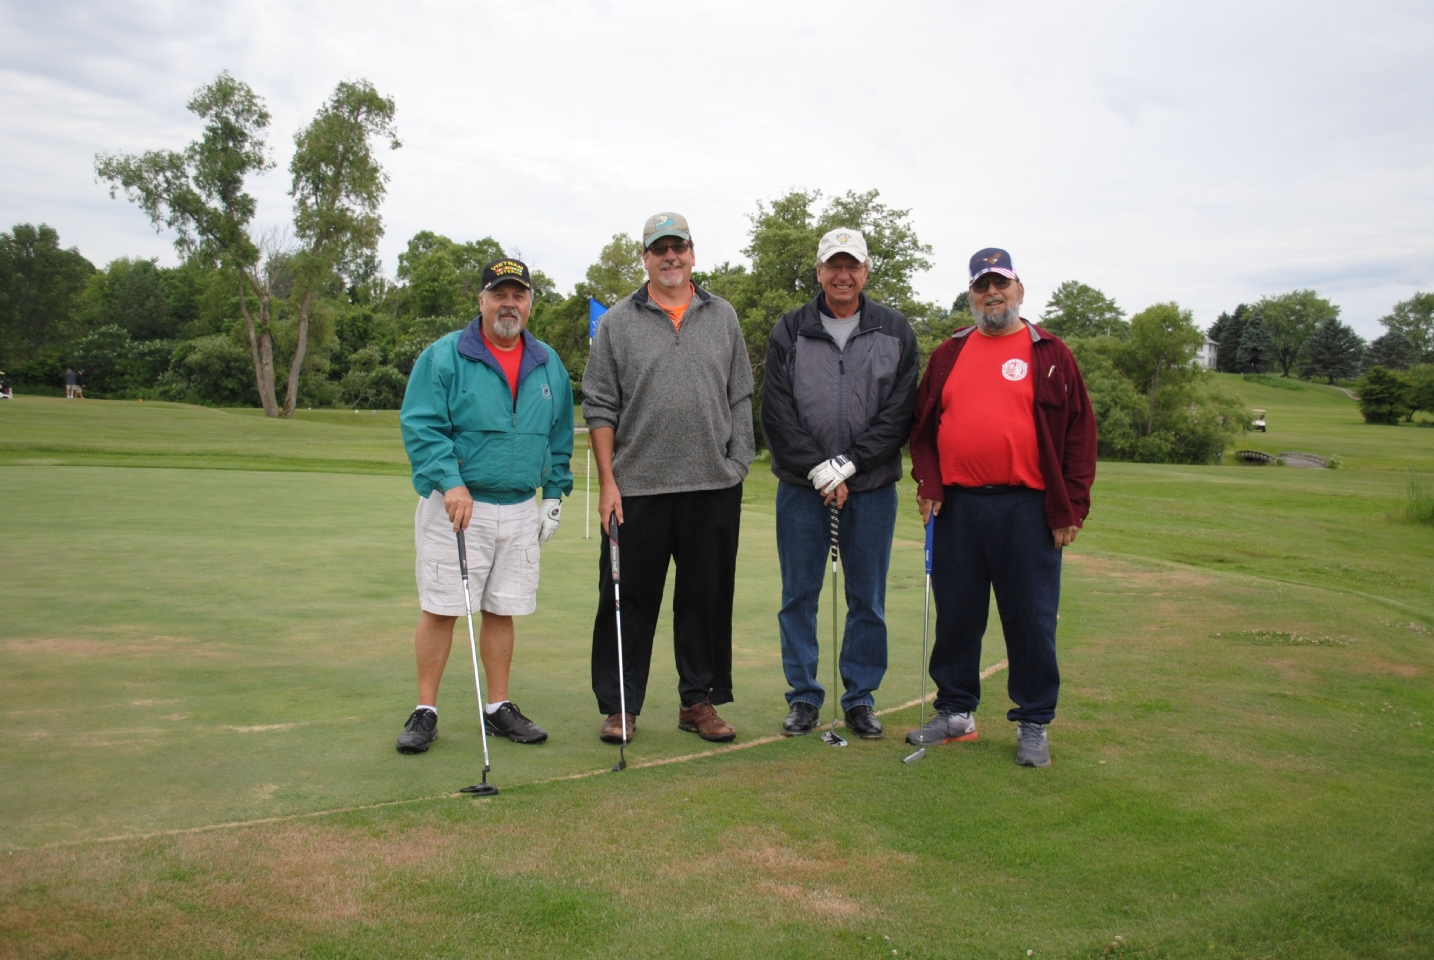 Village Green Golf Course, Newaygo, MI

Dave Hutson
Jake Wabindato
Paul Gryekl
Al McCabe
